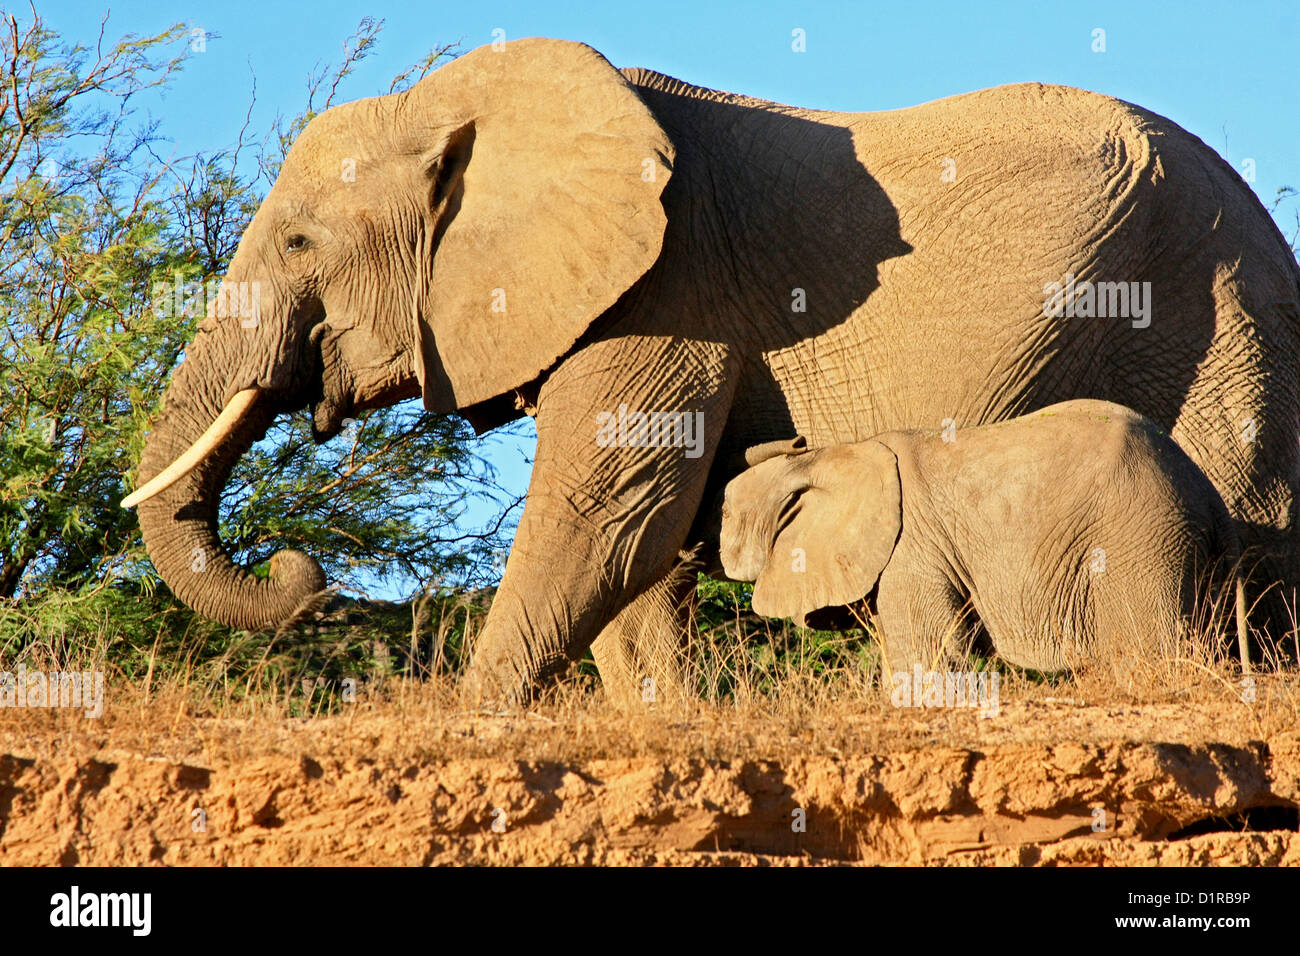 Desert elephants in Damaraland, Namibia Stock Photo